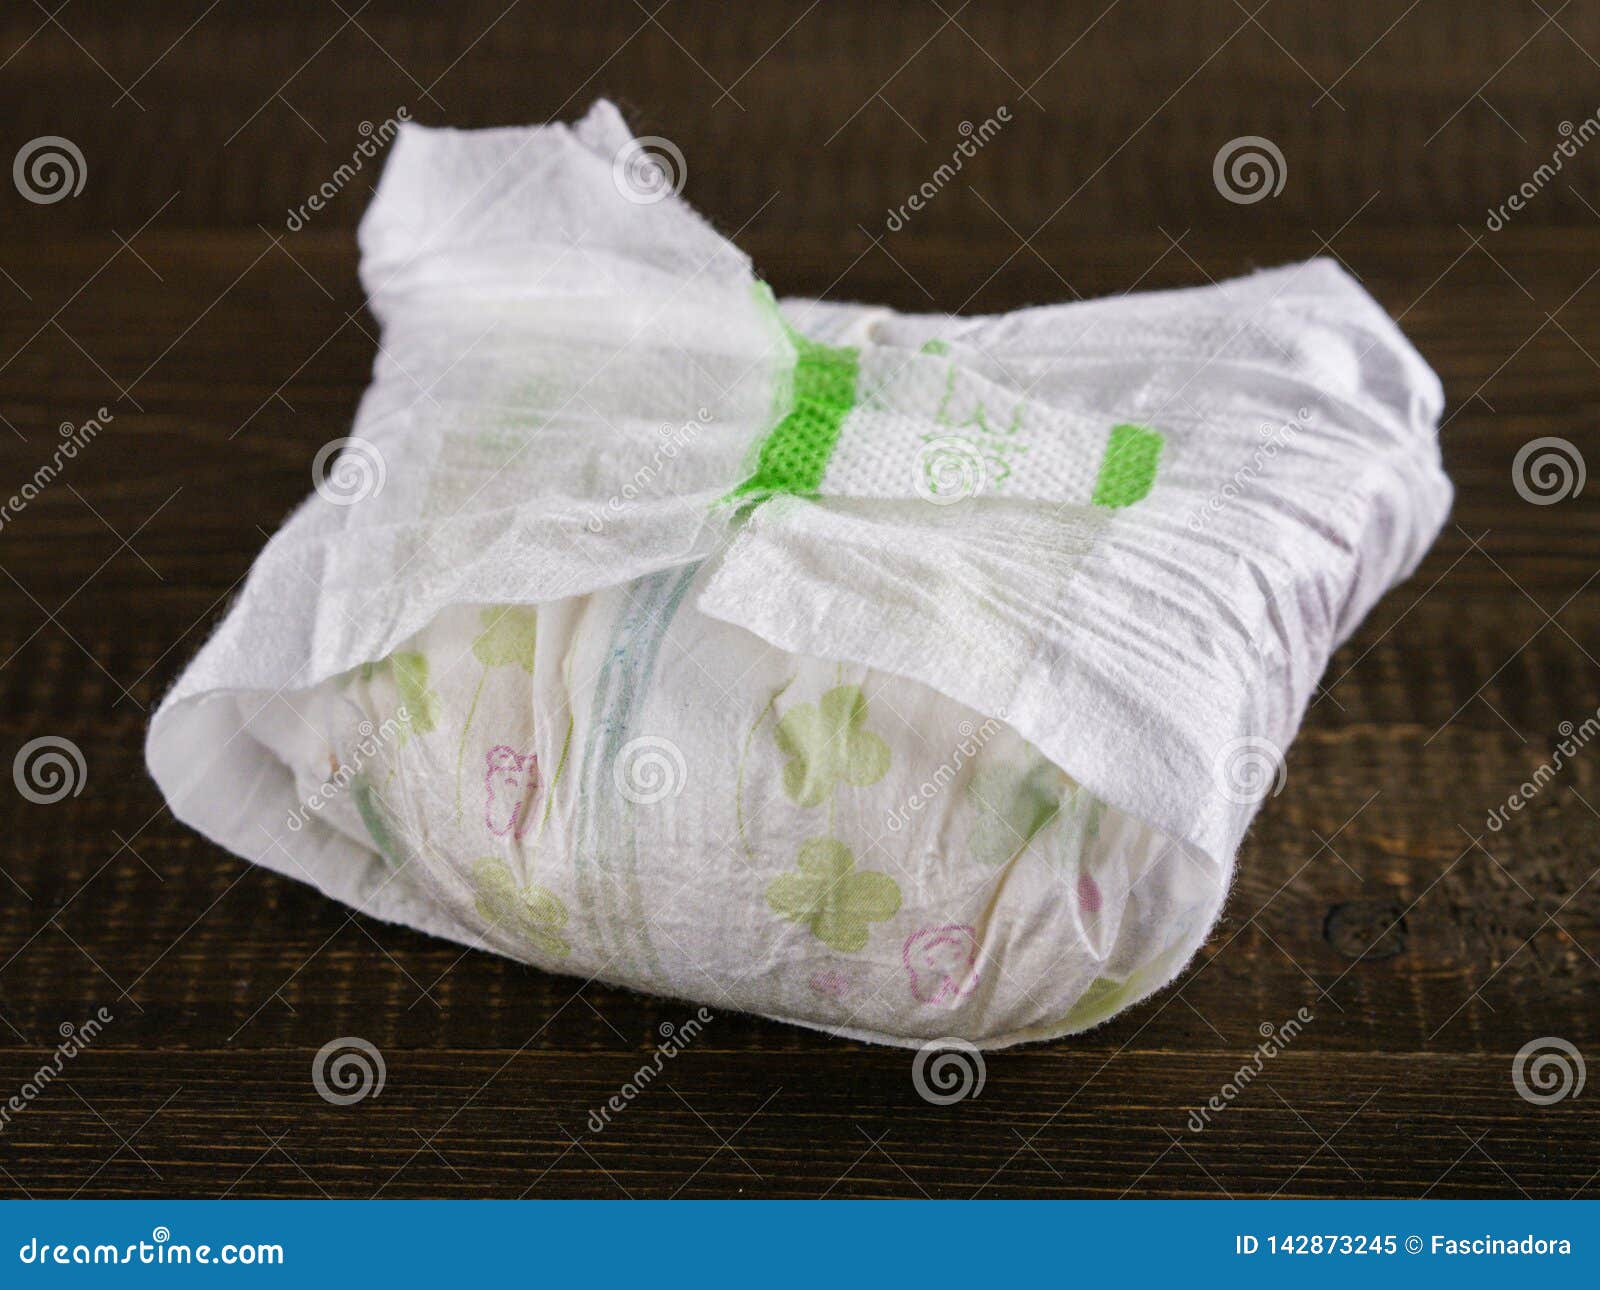 Girls messy diaper 